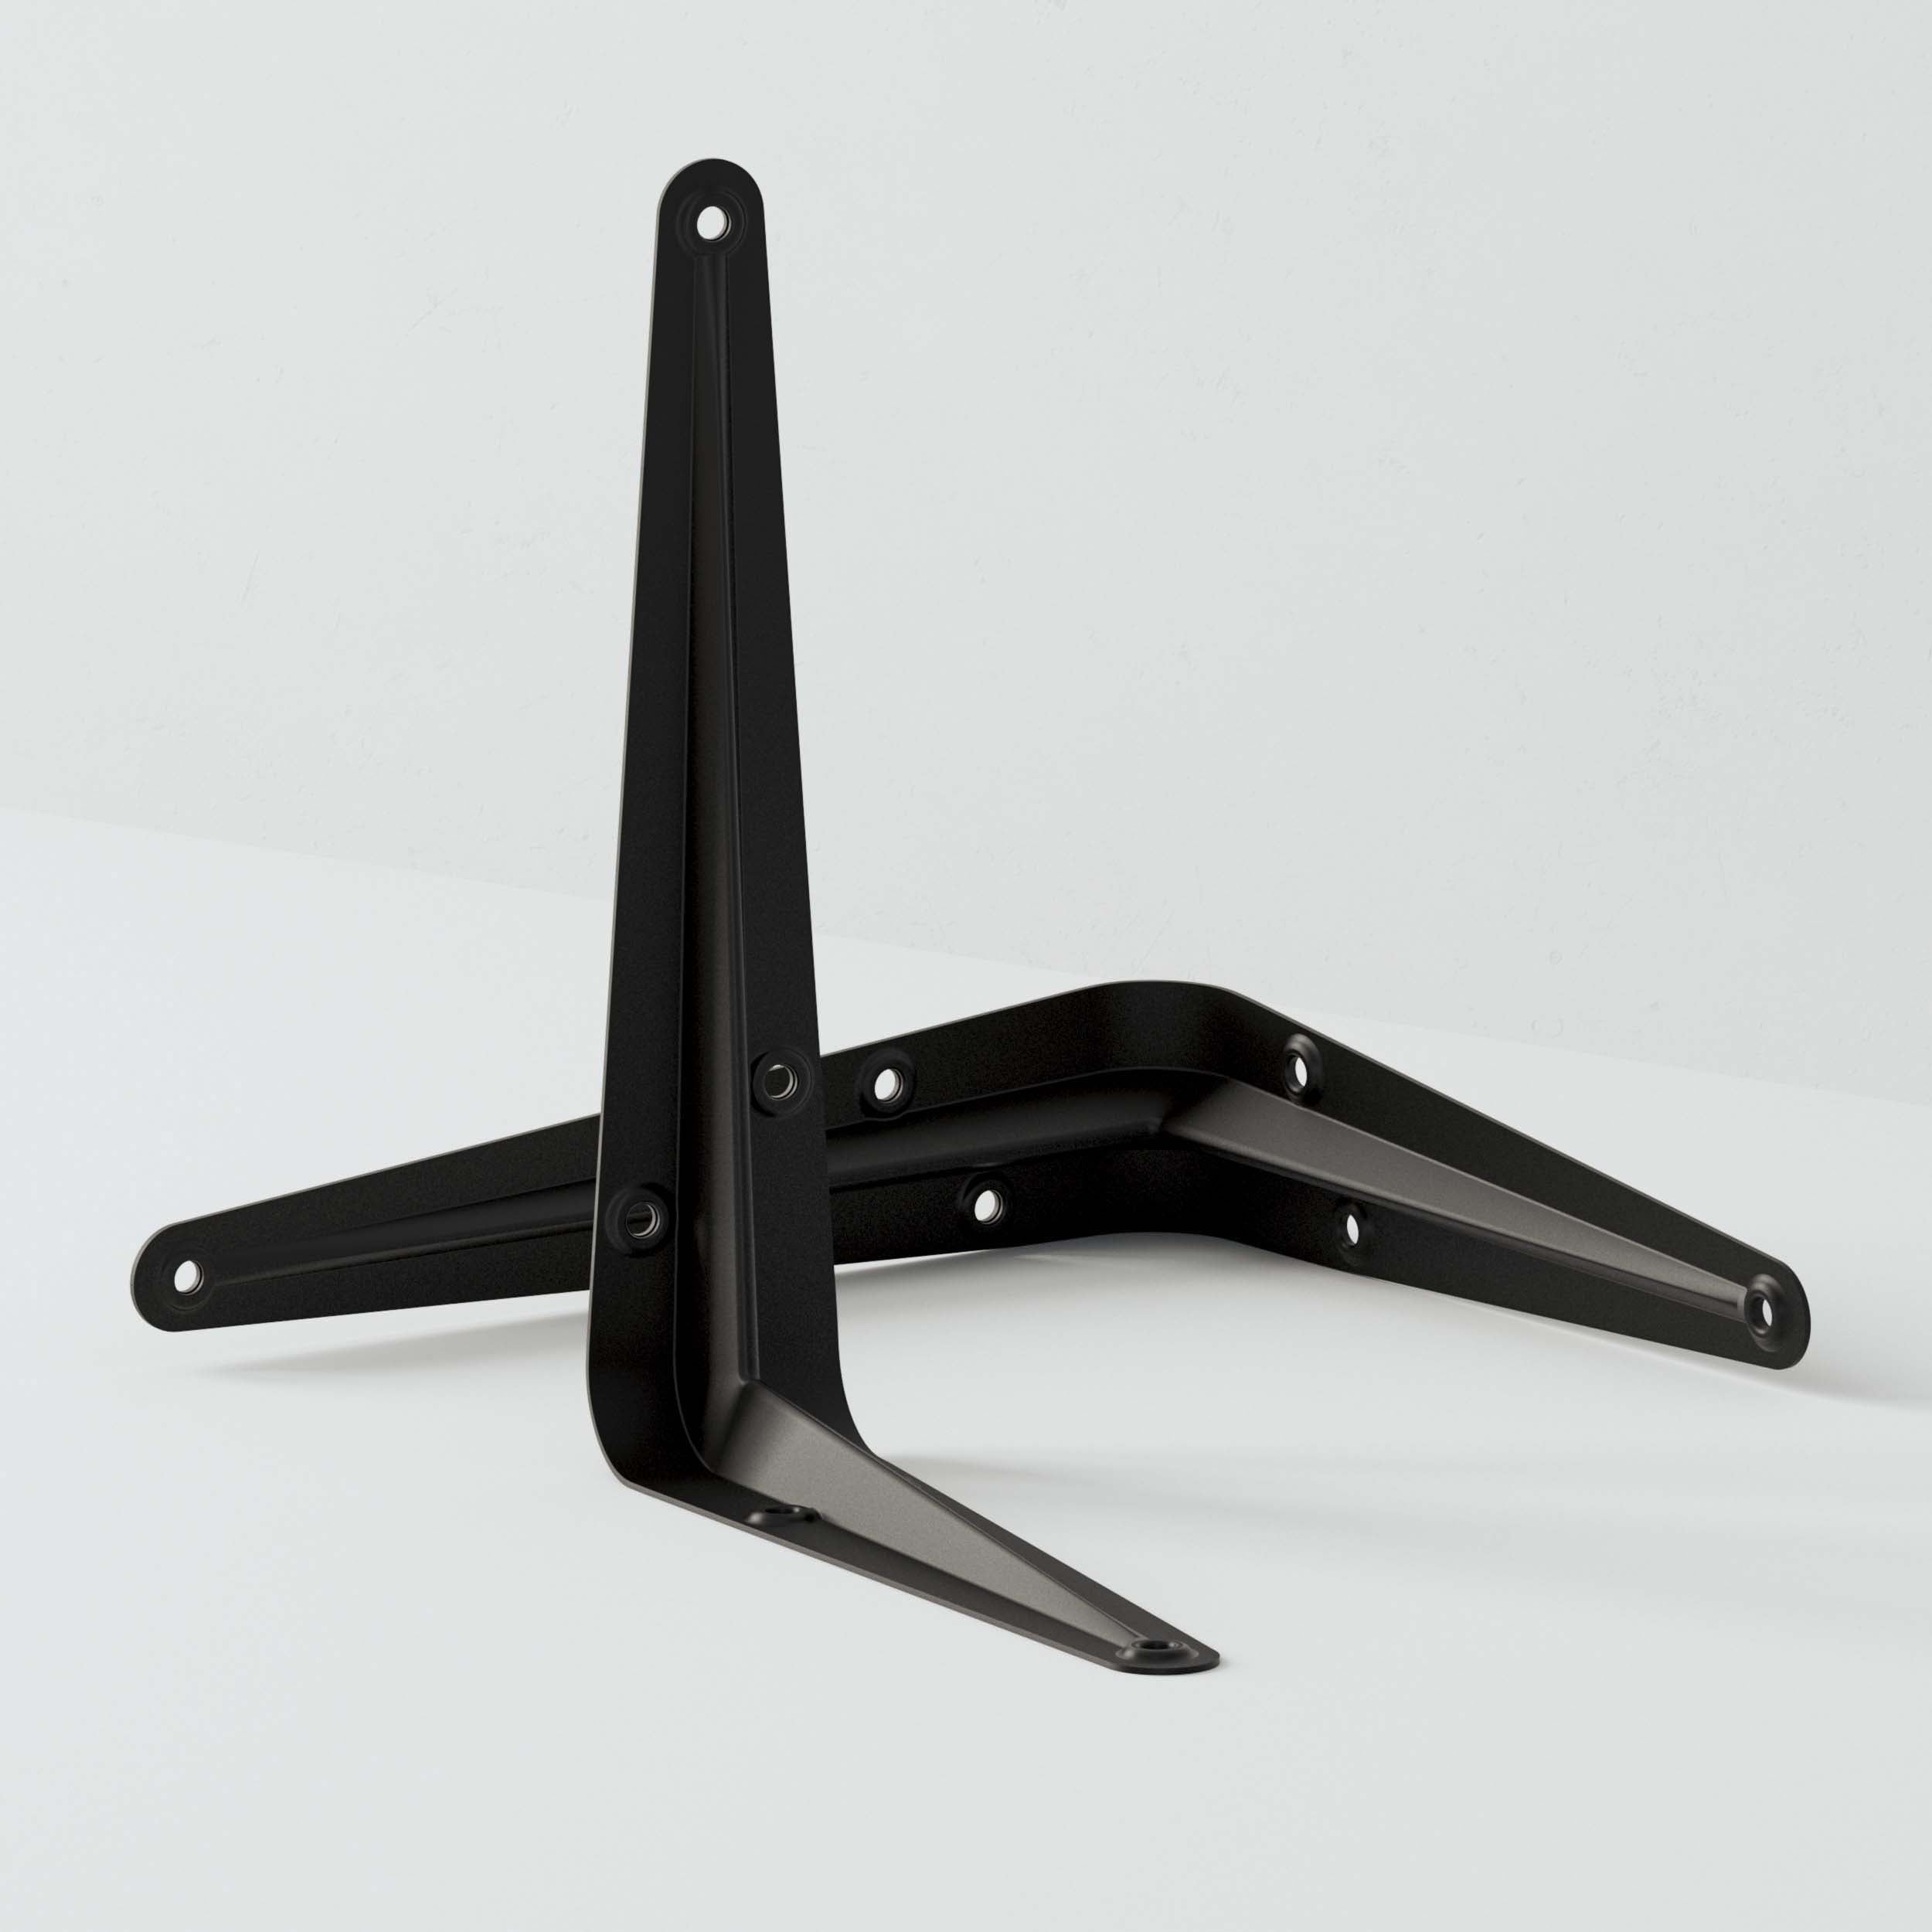 Pair of black heavy duty metal shelf brackets, perfect for DIY custom shelving solutions.